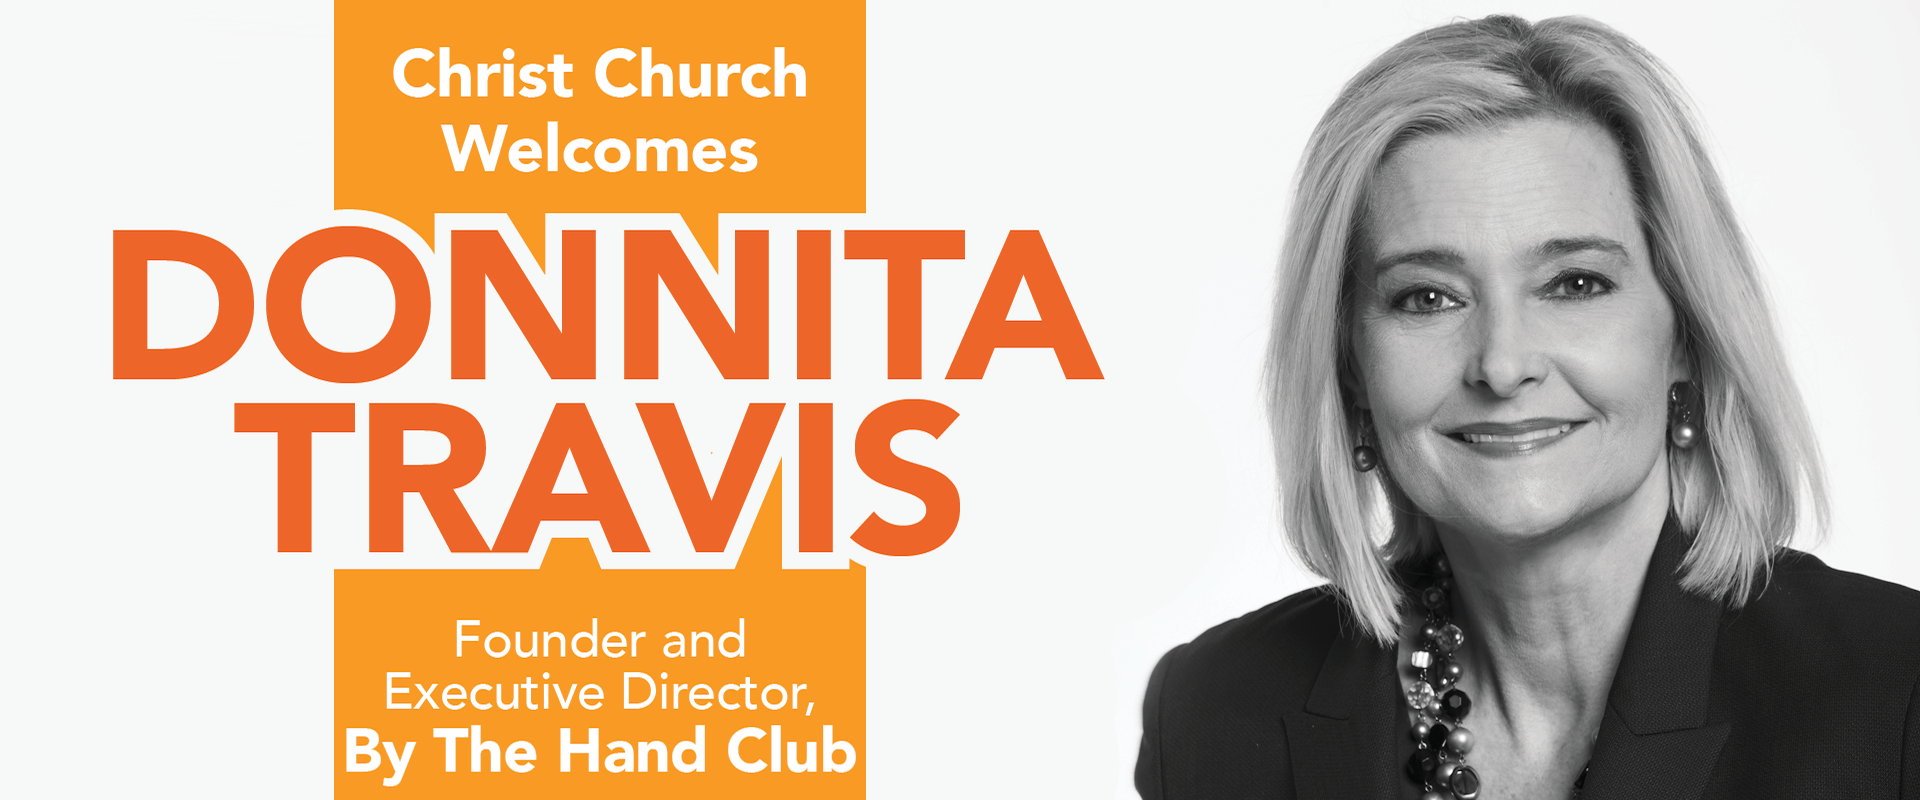 Donnita Travis | Guest Speaker
October 20 + 21 | During Worship Services
